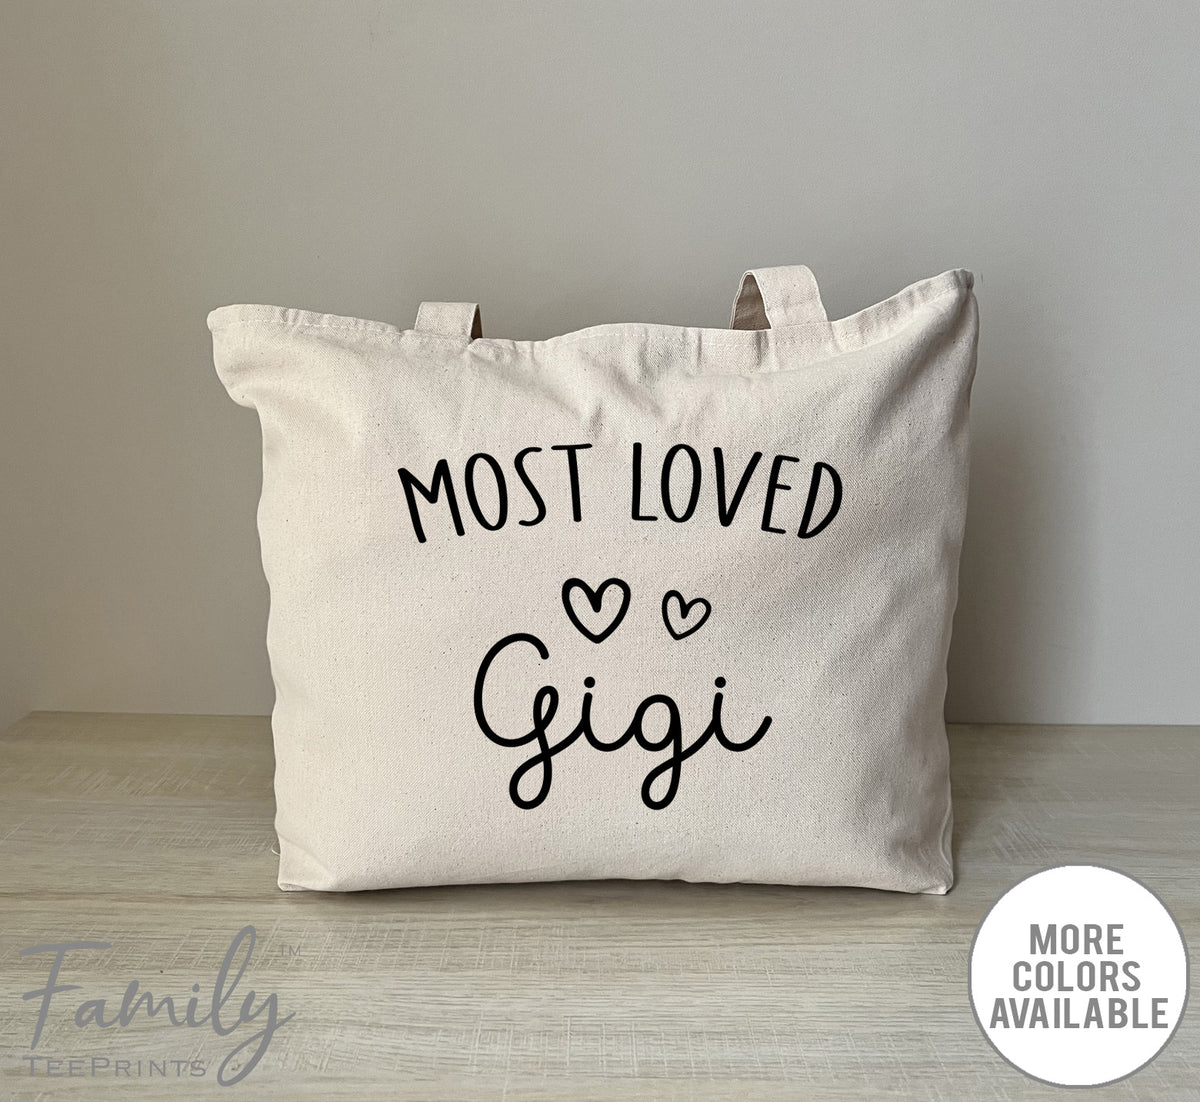 Most Loved Gigi - Zippered Tote Bag - Gigi Bag - Gigi Gift - familyteeprints